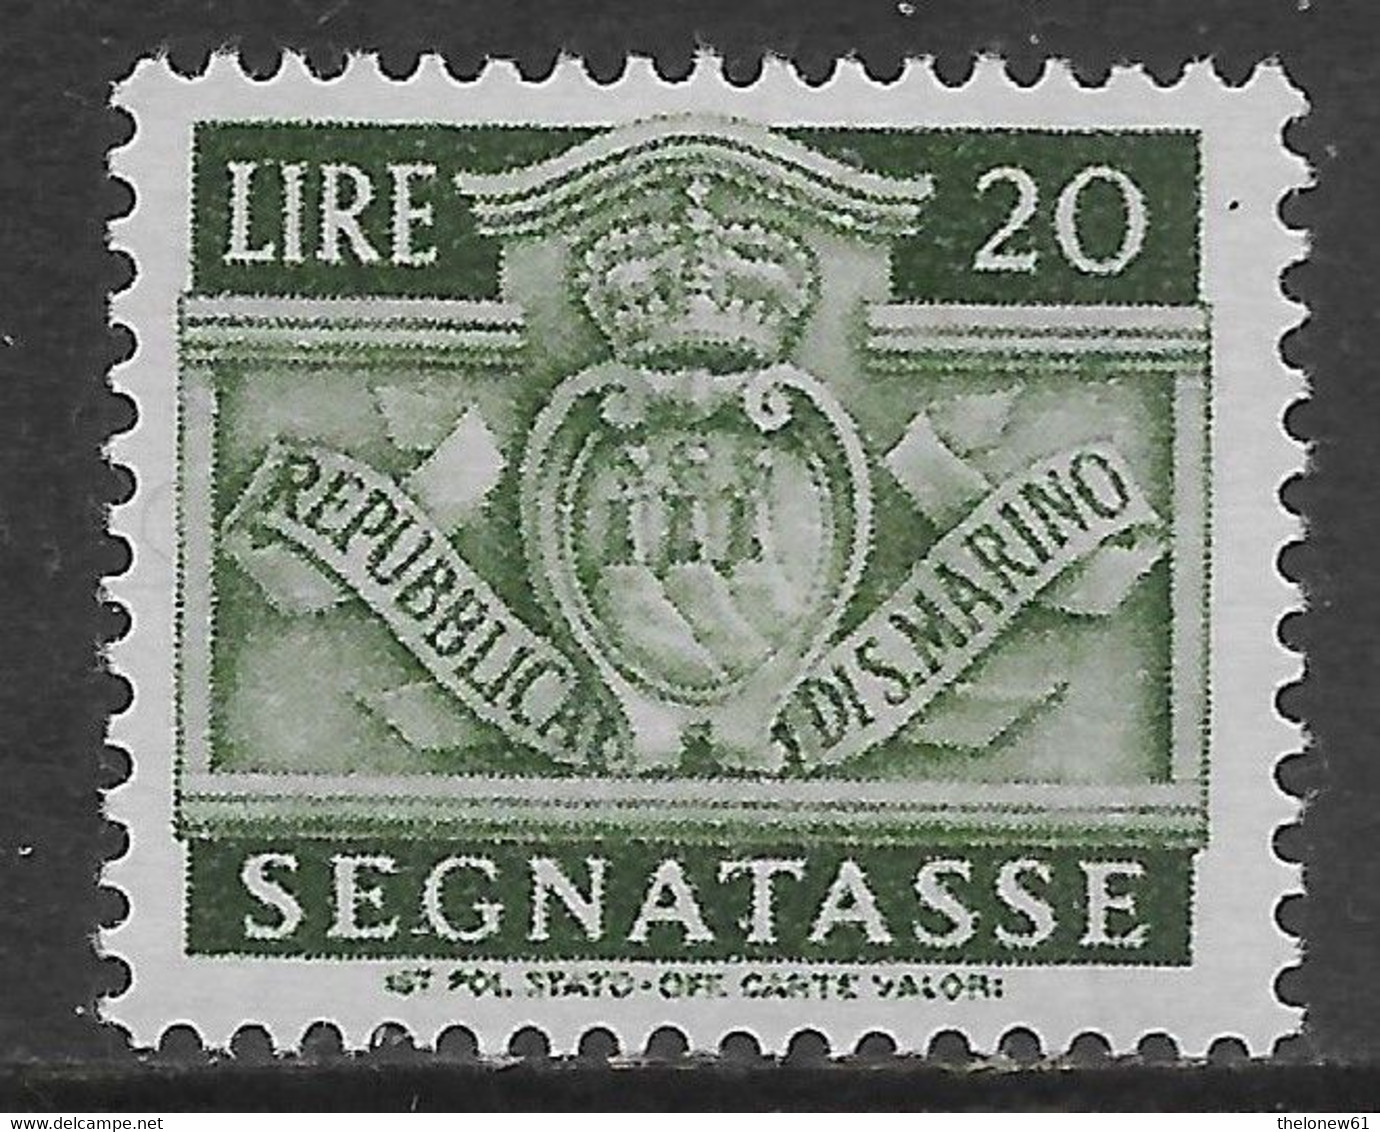 San Marino 1945 Segnatasse Stemma L20 Sa N.S78 Nuovo MH * - Postage Due